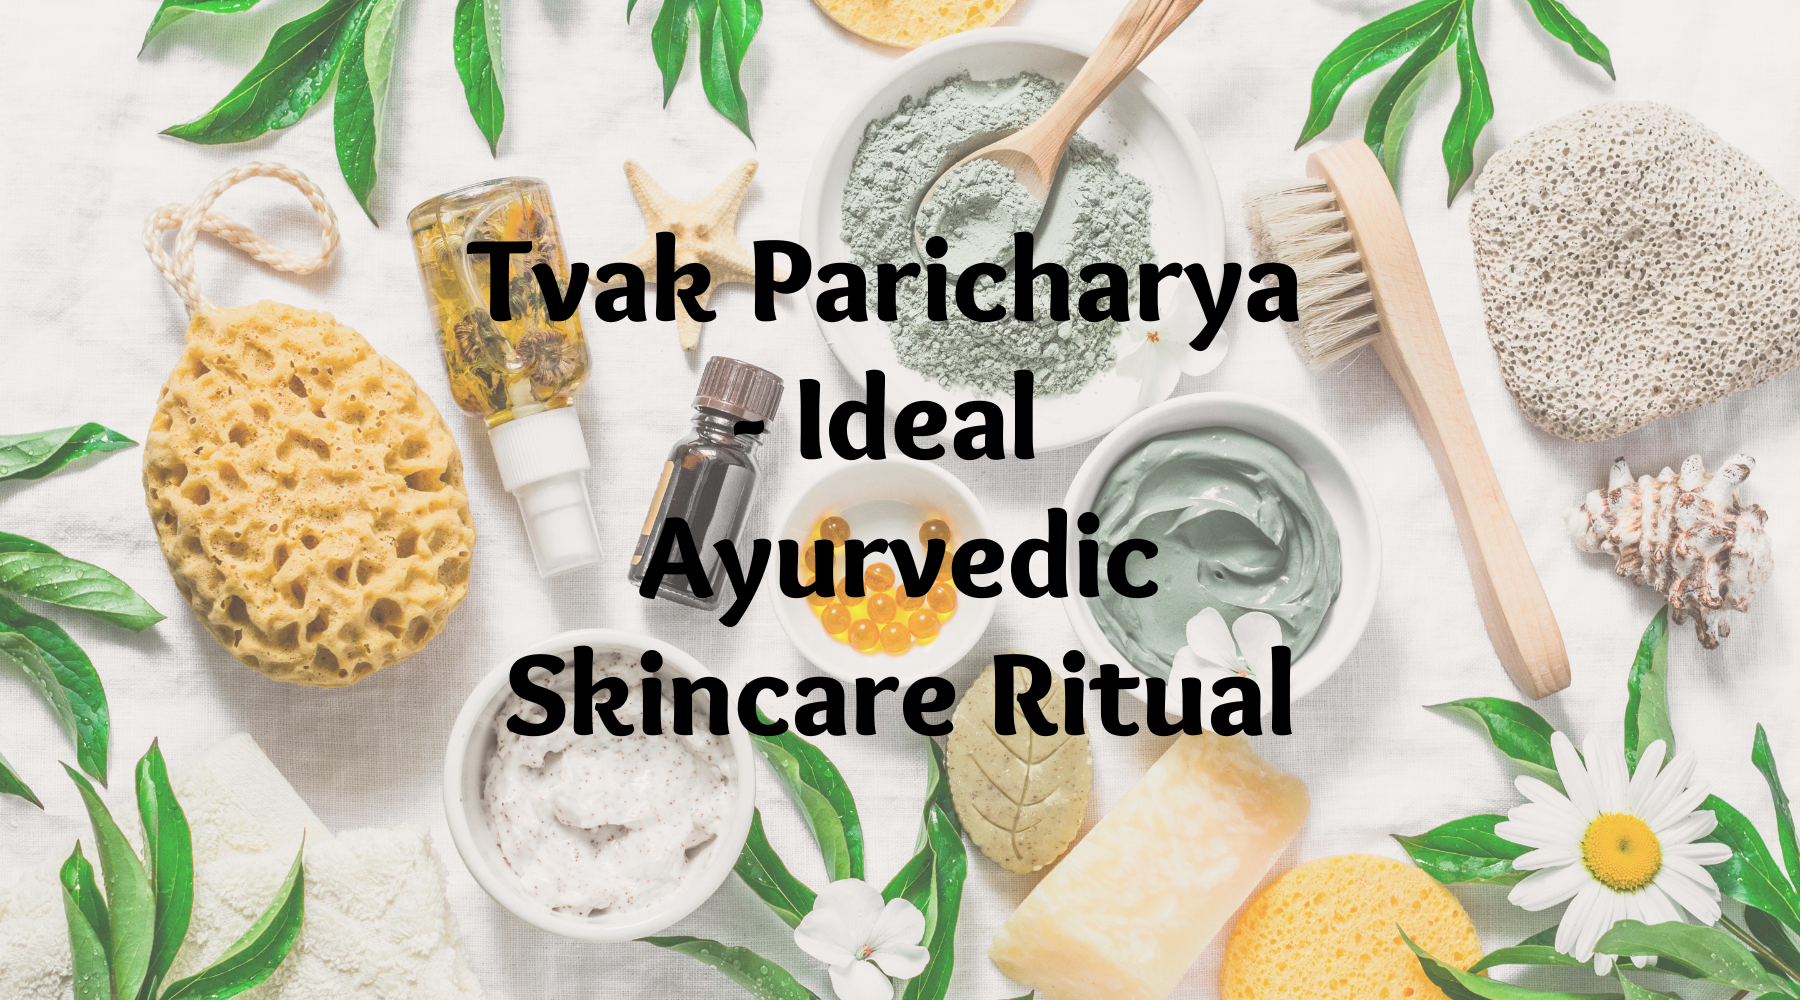 Tvak Paricharya - Ideal Ayurvedic Skincare Ritual